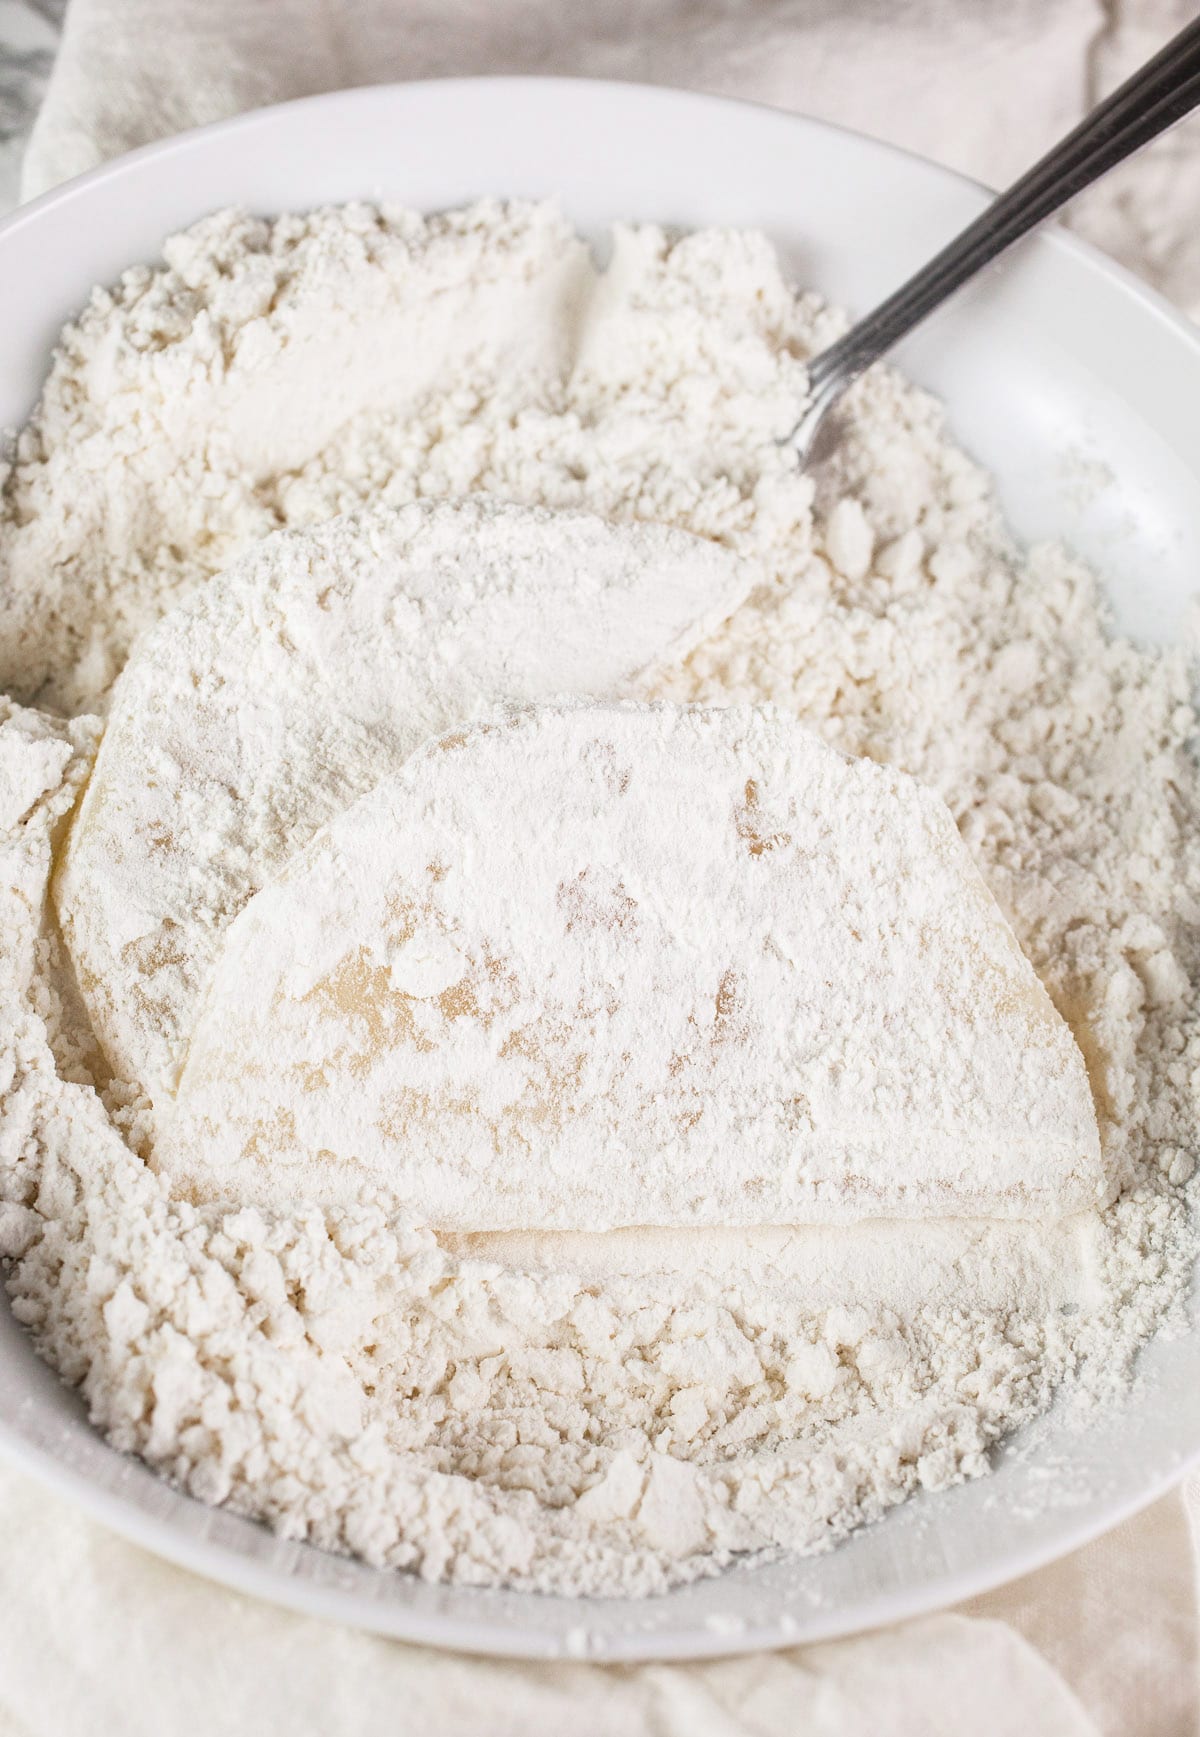 Kohlrabi slices coated in flour in white bowl.